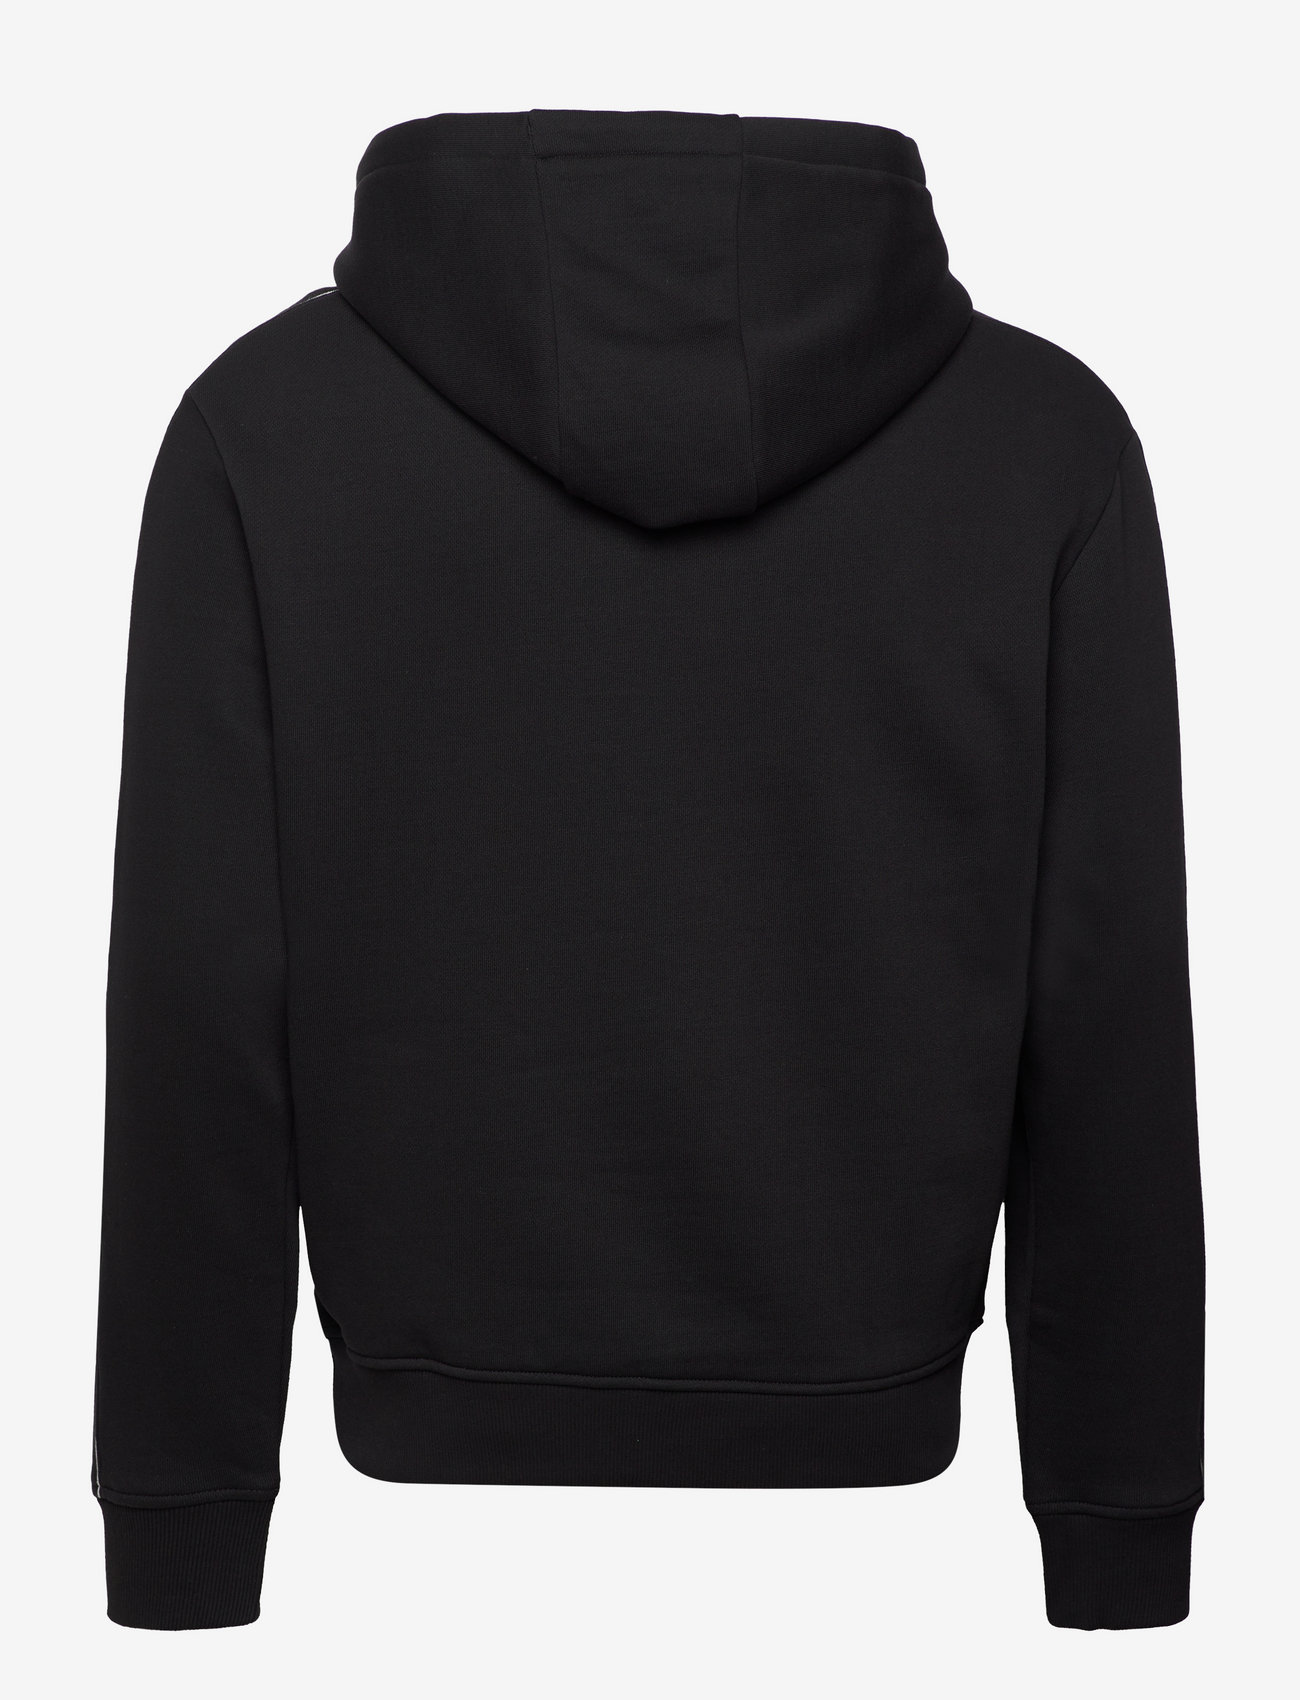 BOSS - Seeger 89_HC - hoodies - black - 1